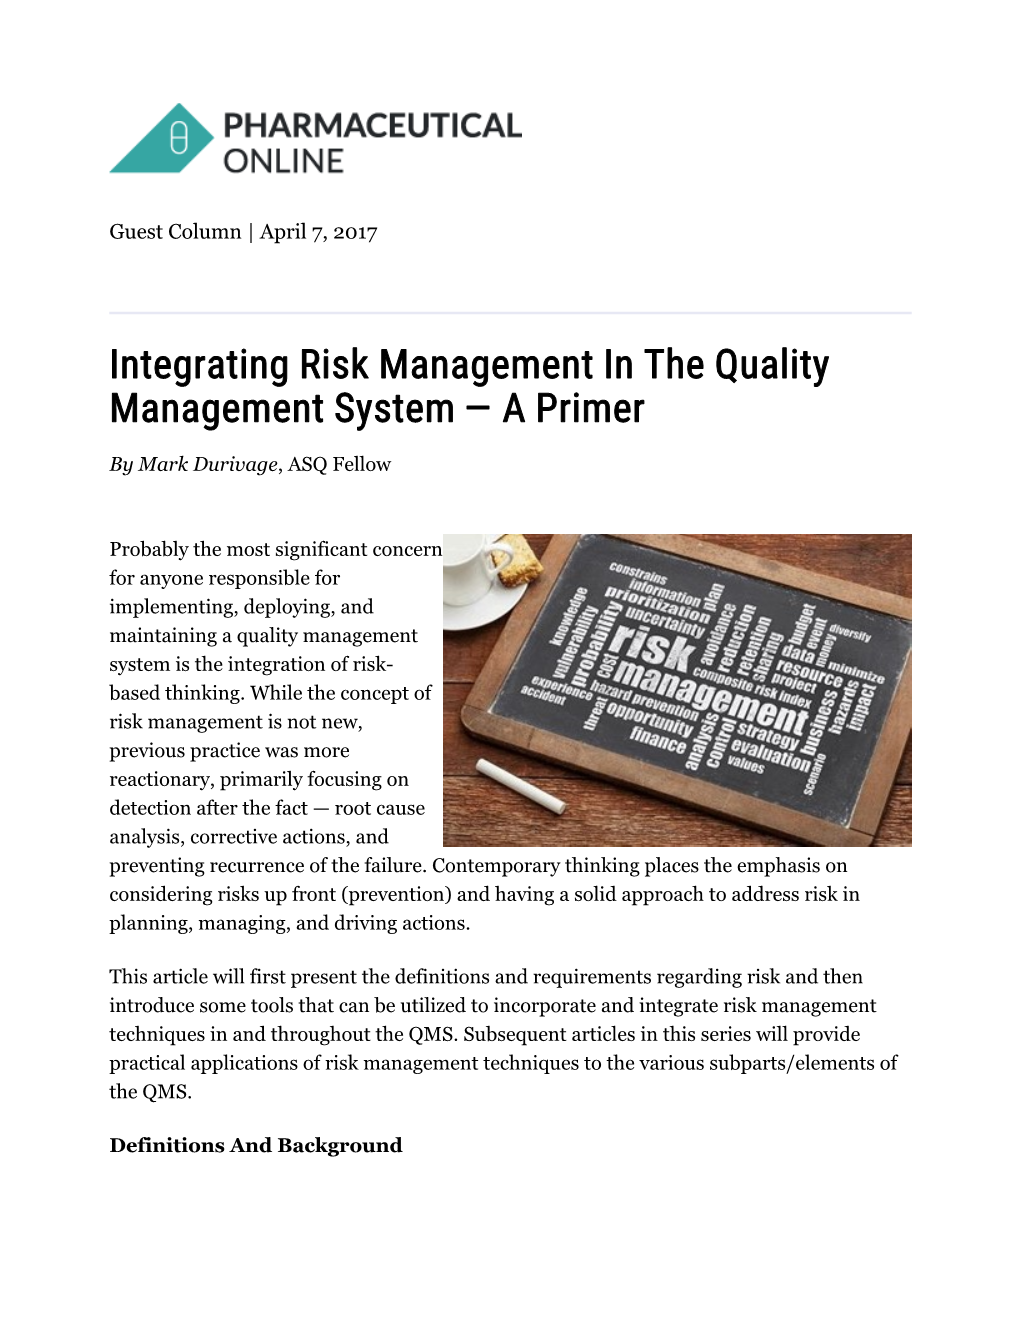 Integrating Risk Management in the Quality Management System — a Primer